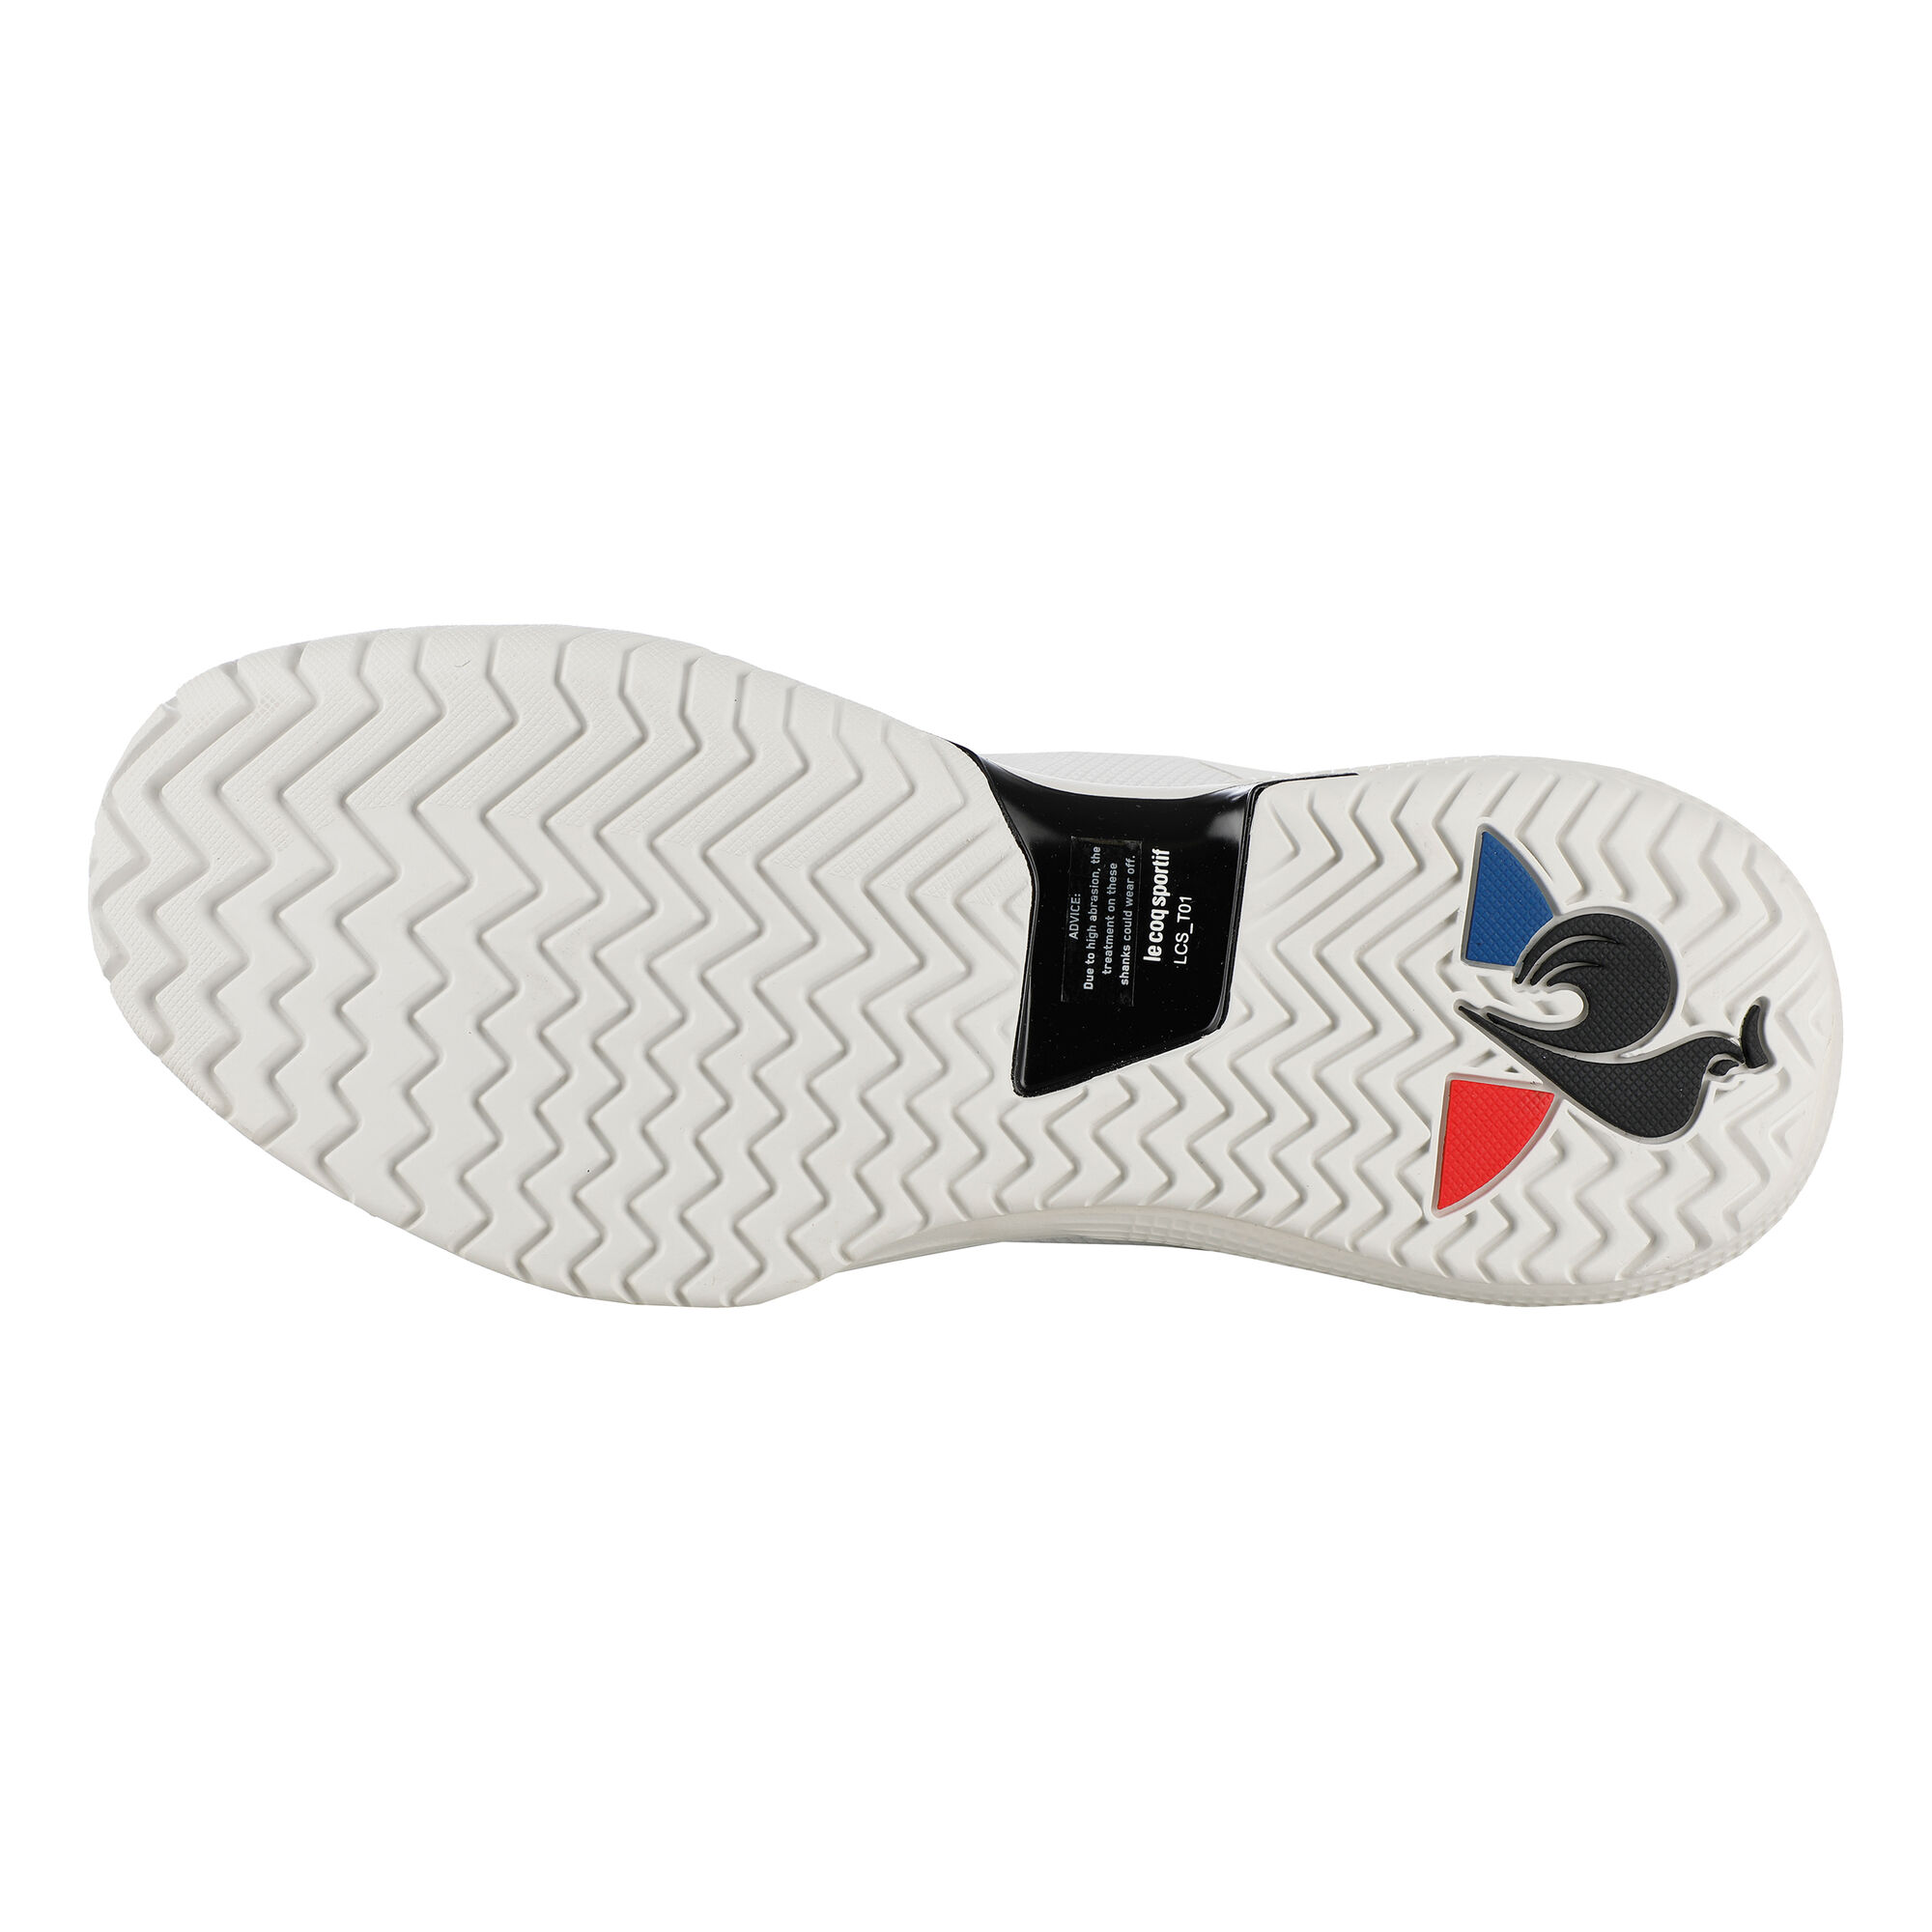 schuur wereld merk buy Le Coq Sportif Futur LCS T01 All Court Shoe - White online |  Tennis-Point